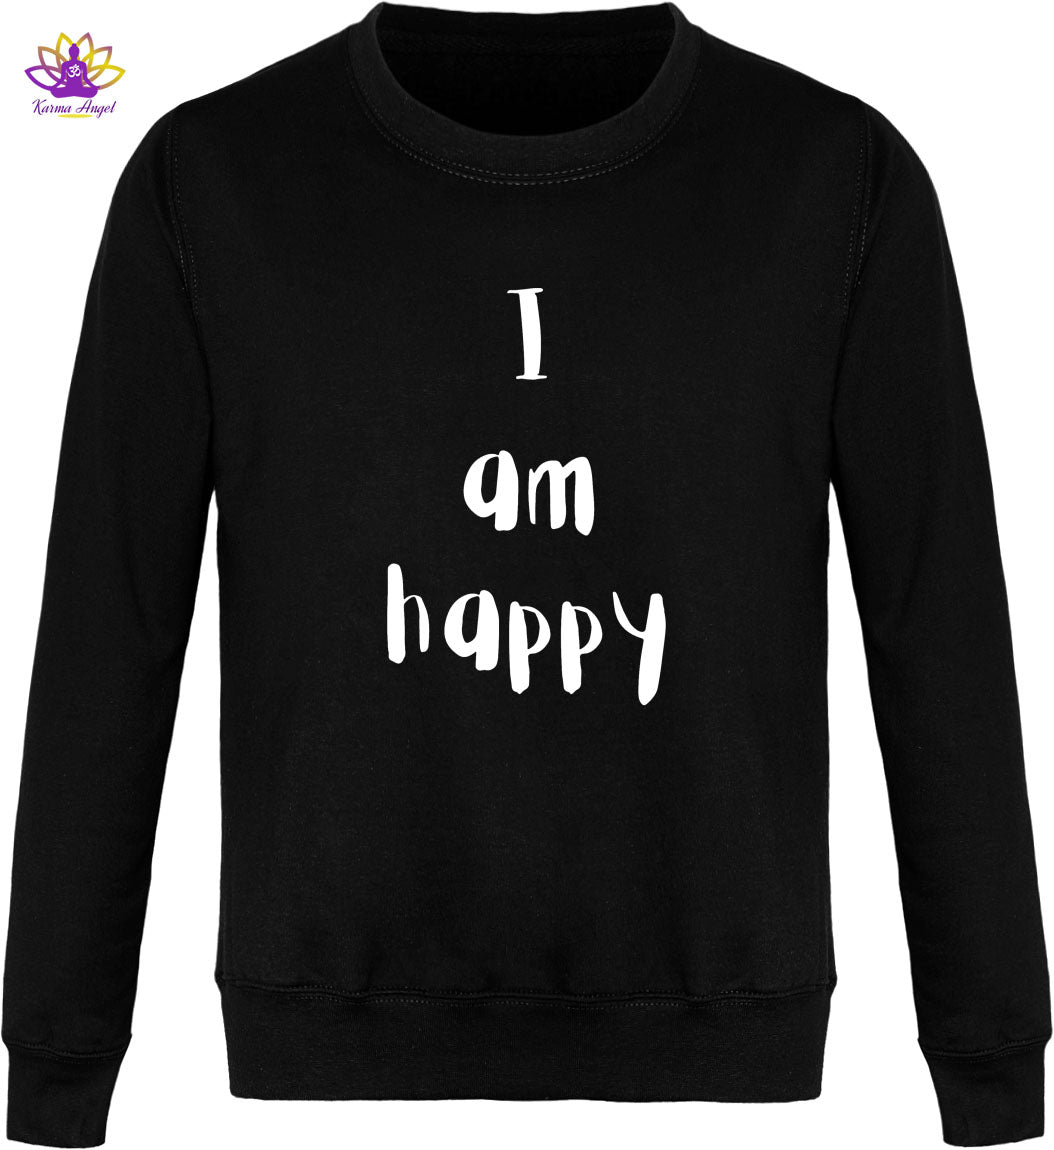 "I am happy" - Sweatshirt homme inspirant en coton bio, plusieurs coloris 